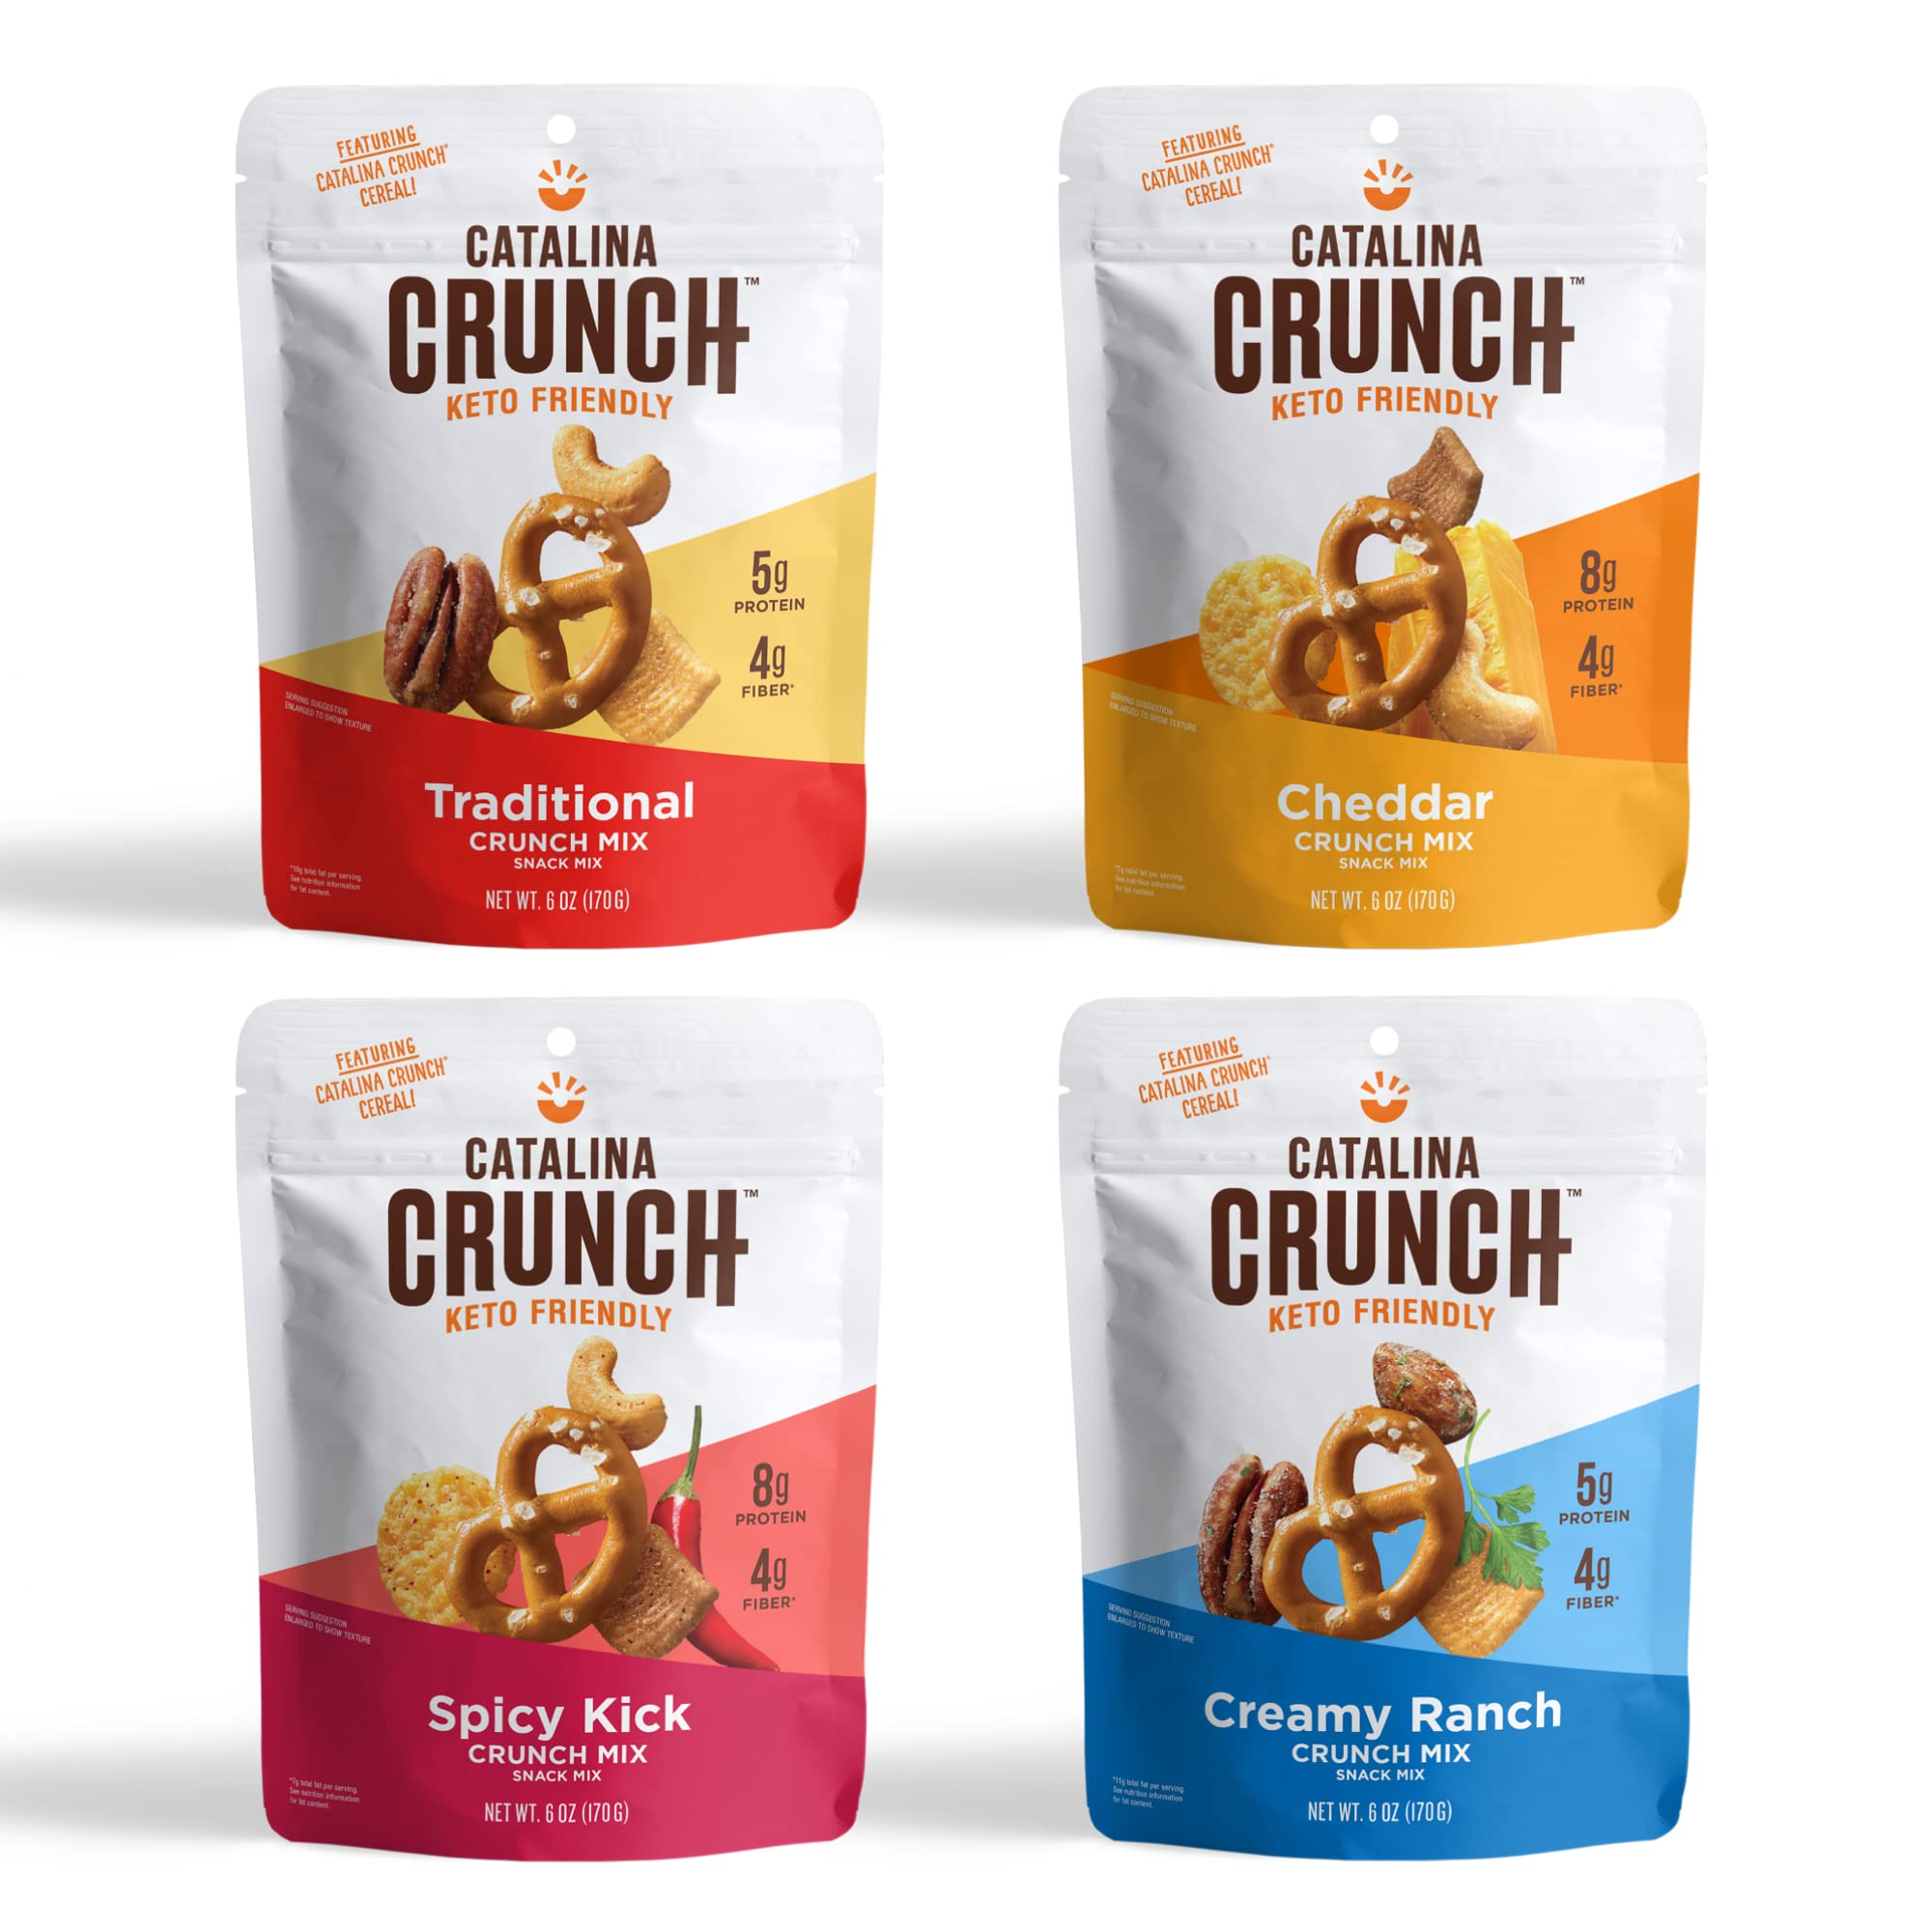 Catalina Crunch Snack Crunch Mix (1 bag) catalina-crunch-snack-crunch-mix-1-bag Traditional,Cheddar,Ranch,Spicy Kick Catalina Crunch